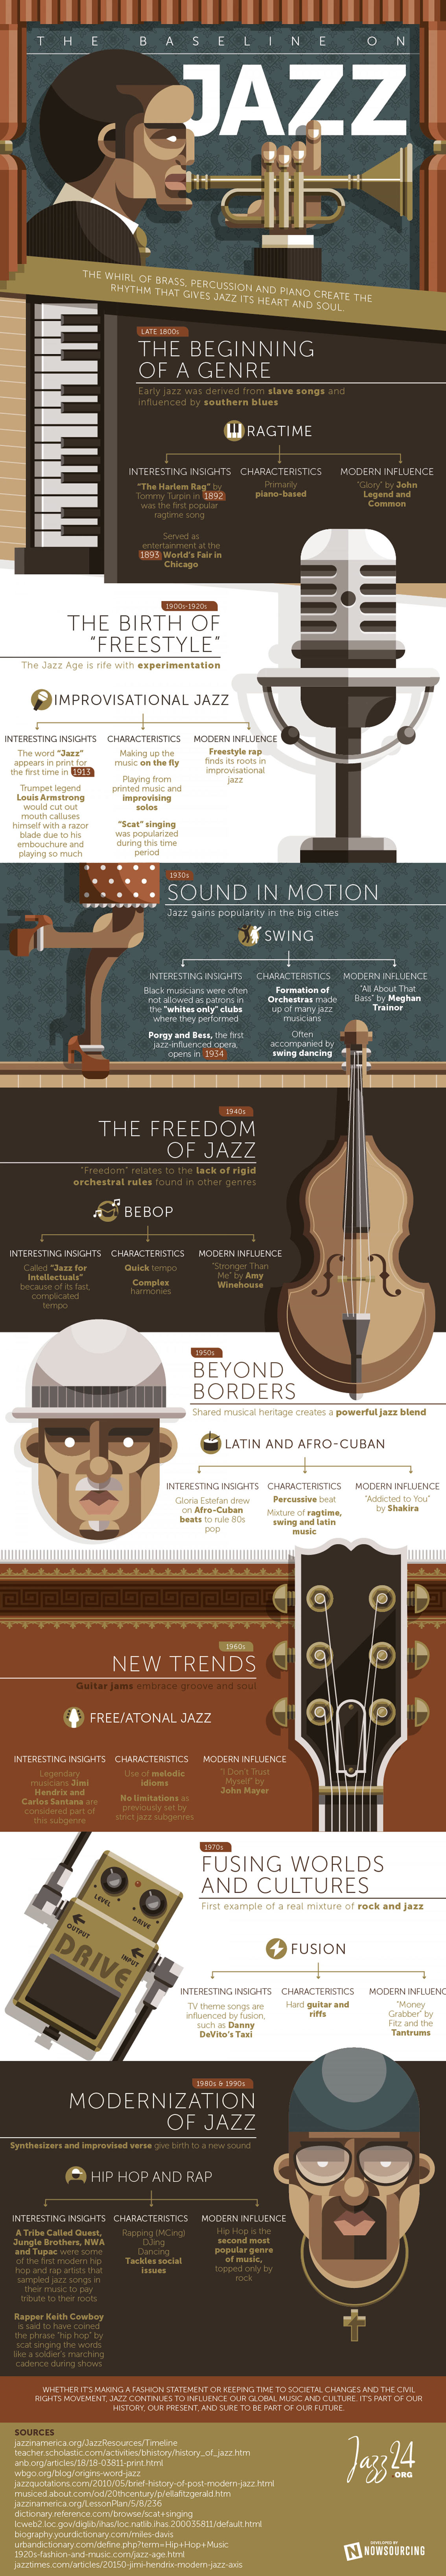 History Of Jazz - Music Infographic